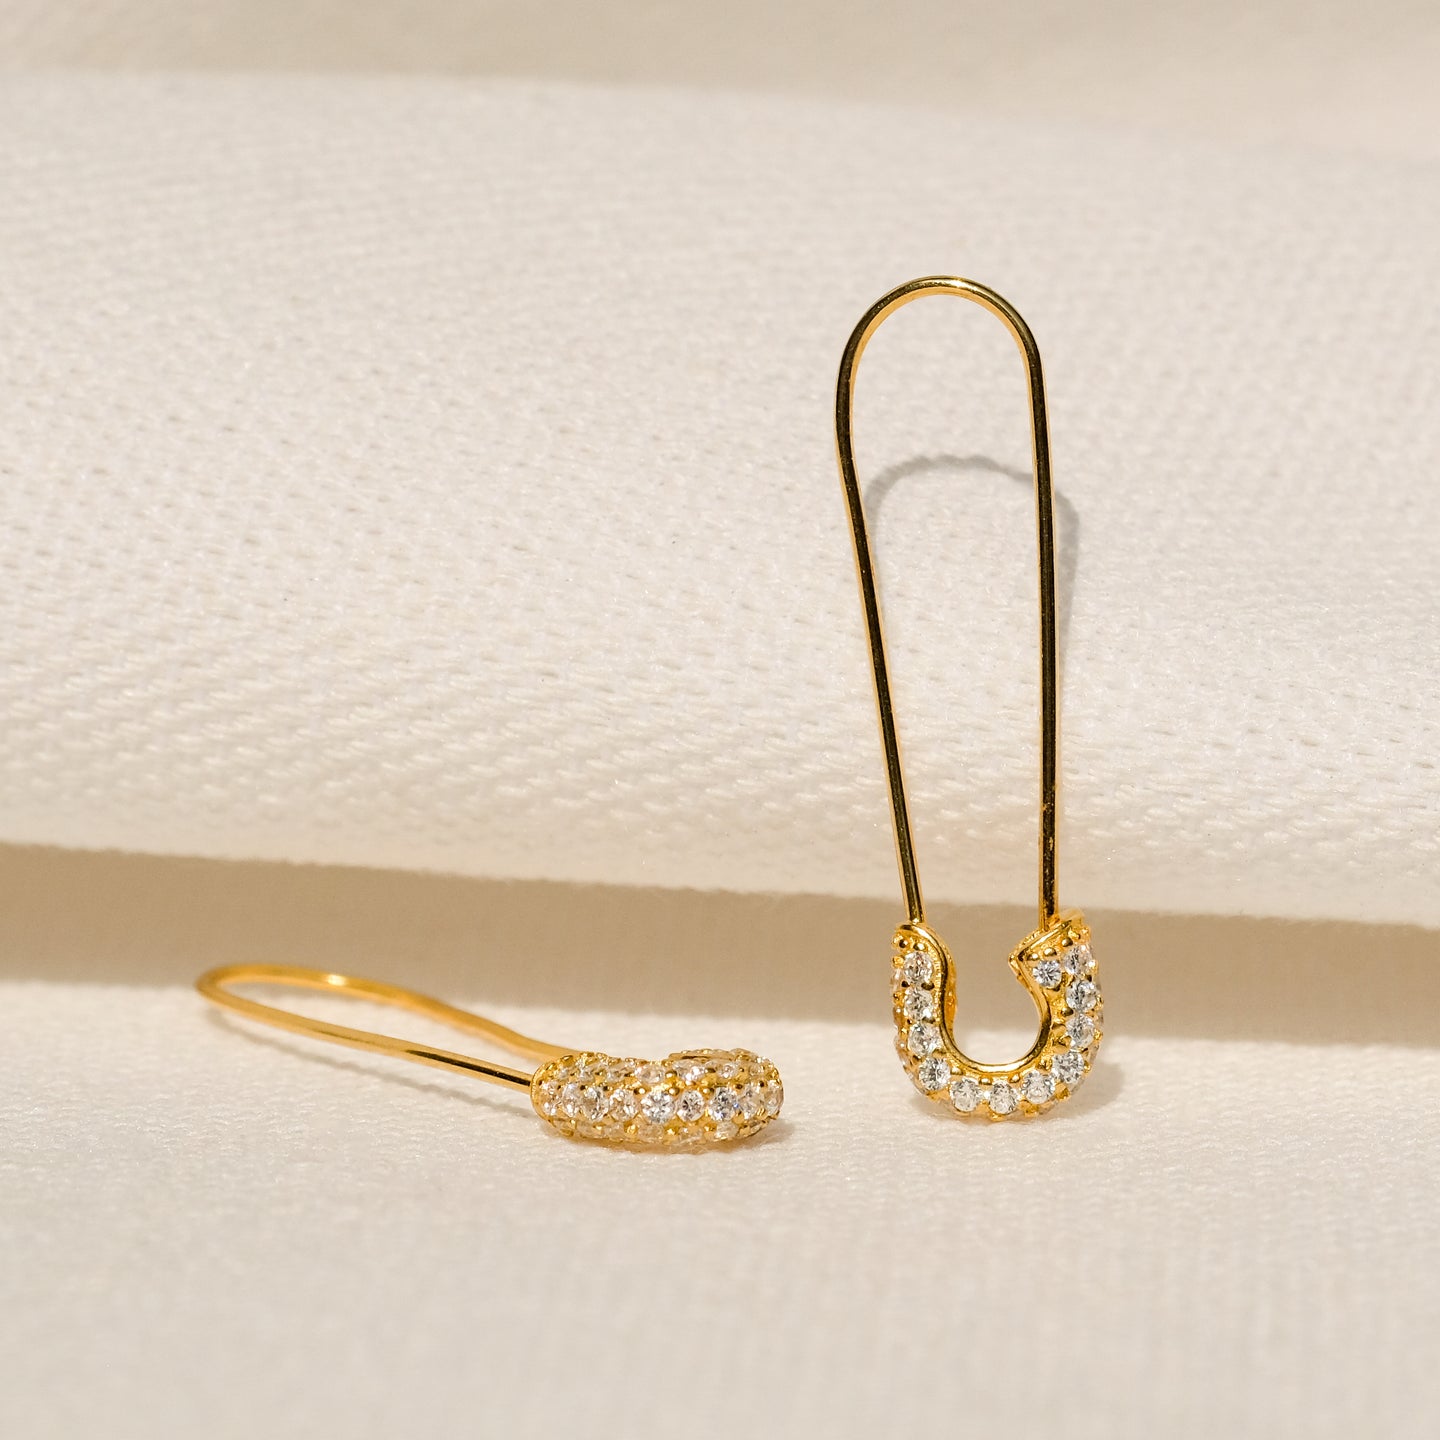 products/pino-cz-earrings-18k-gold-vermeil-1.jpg